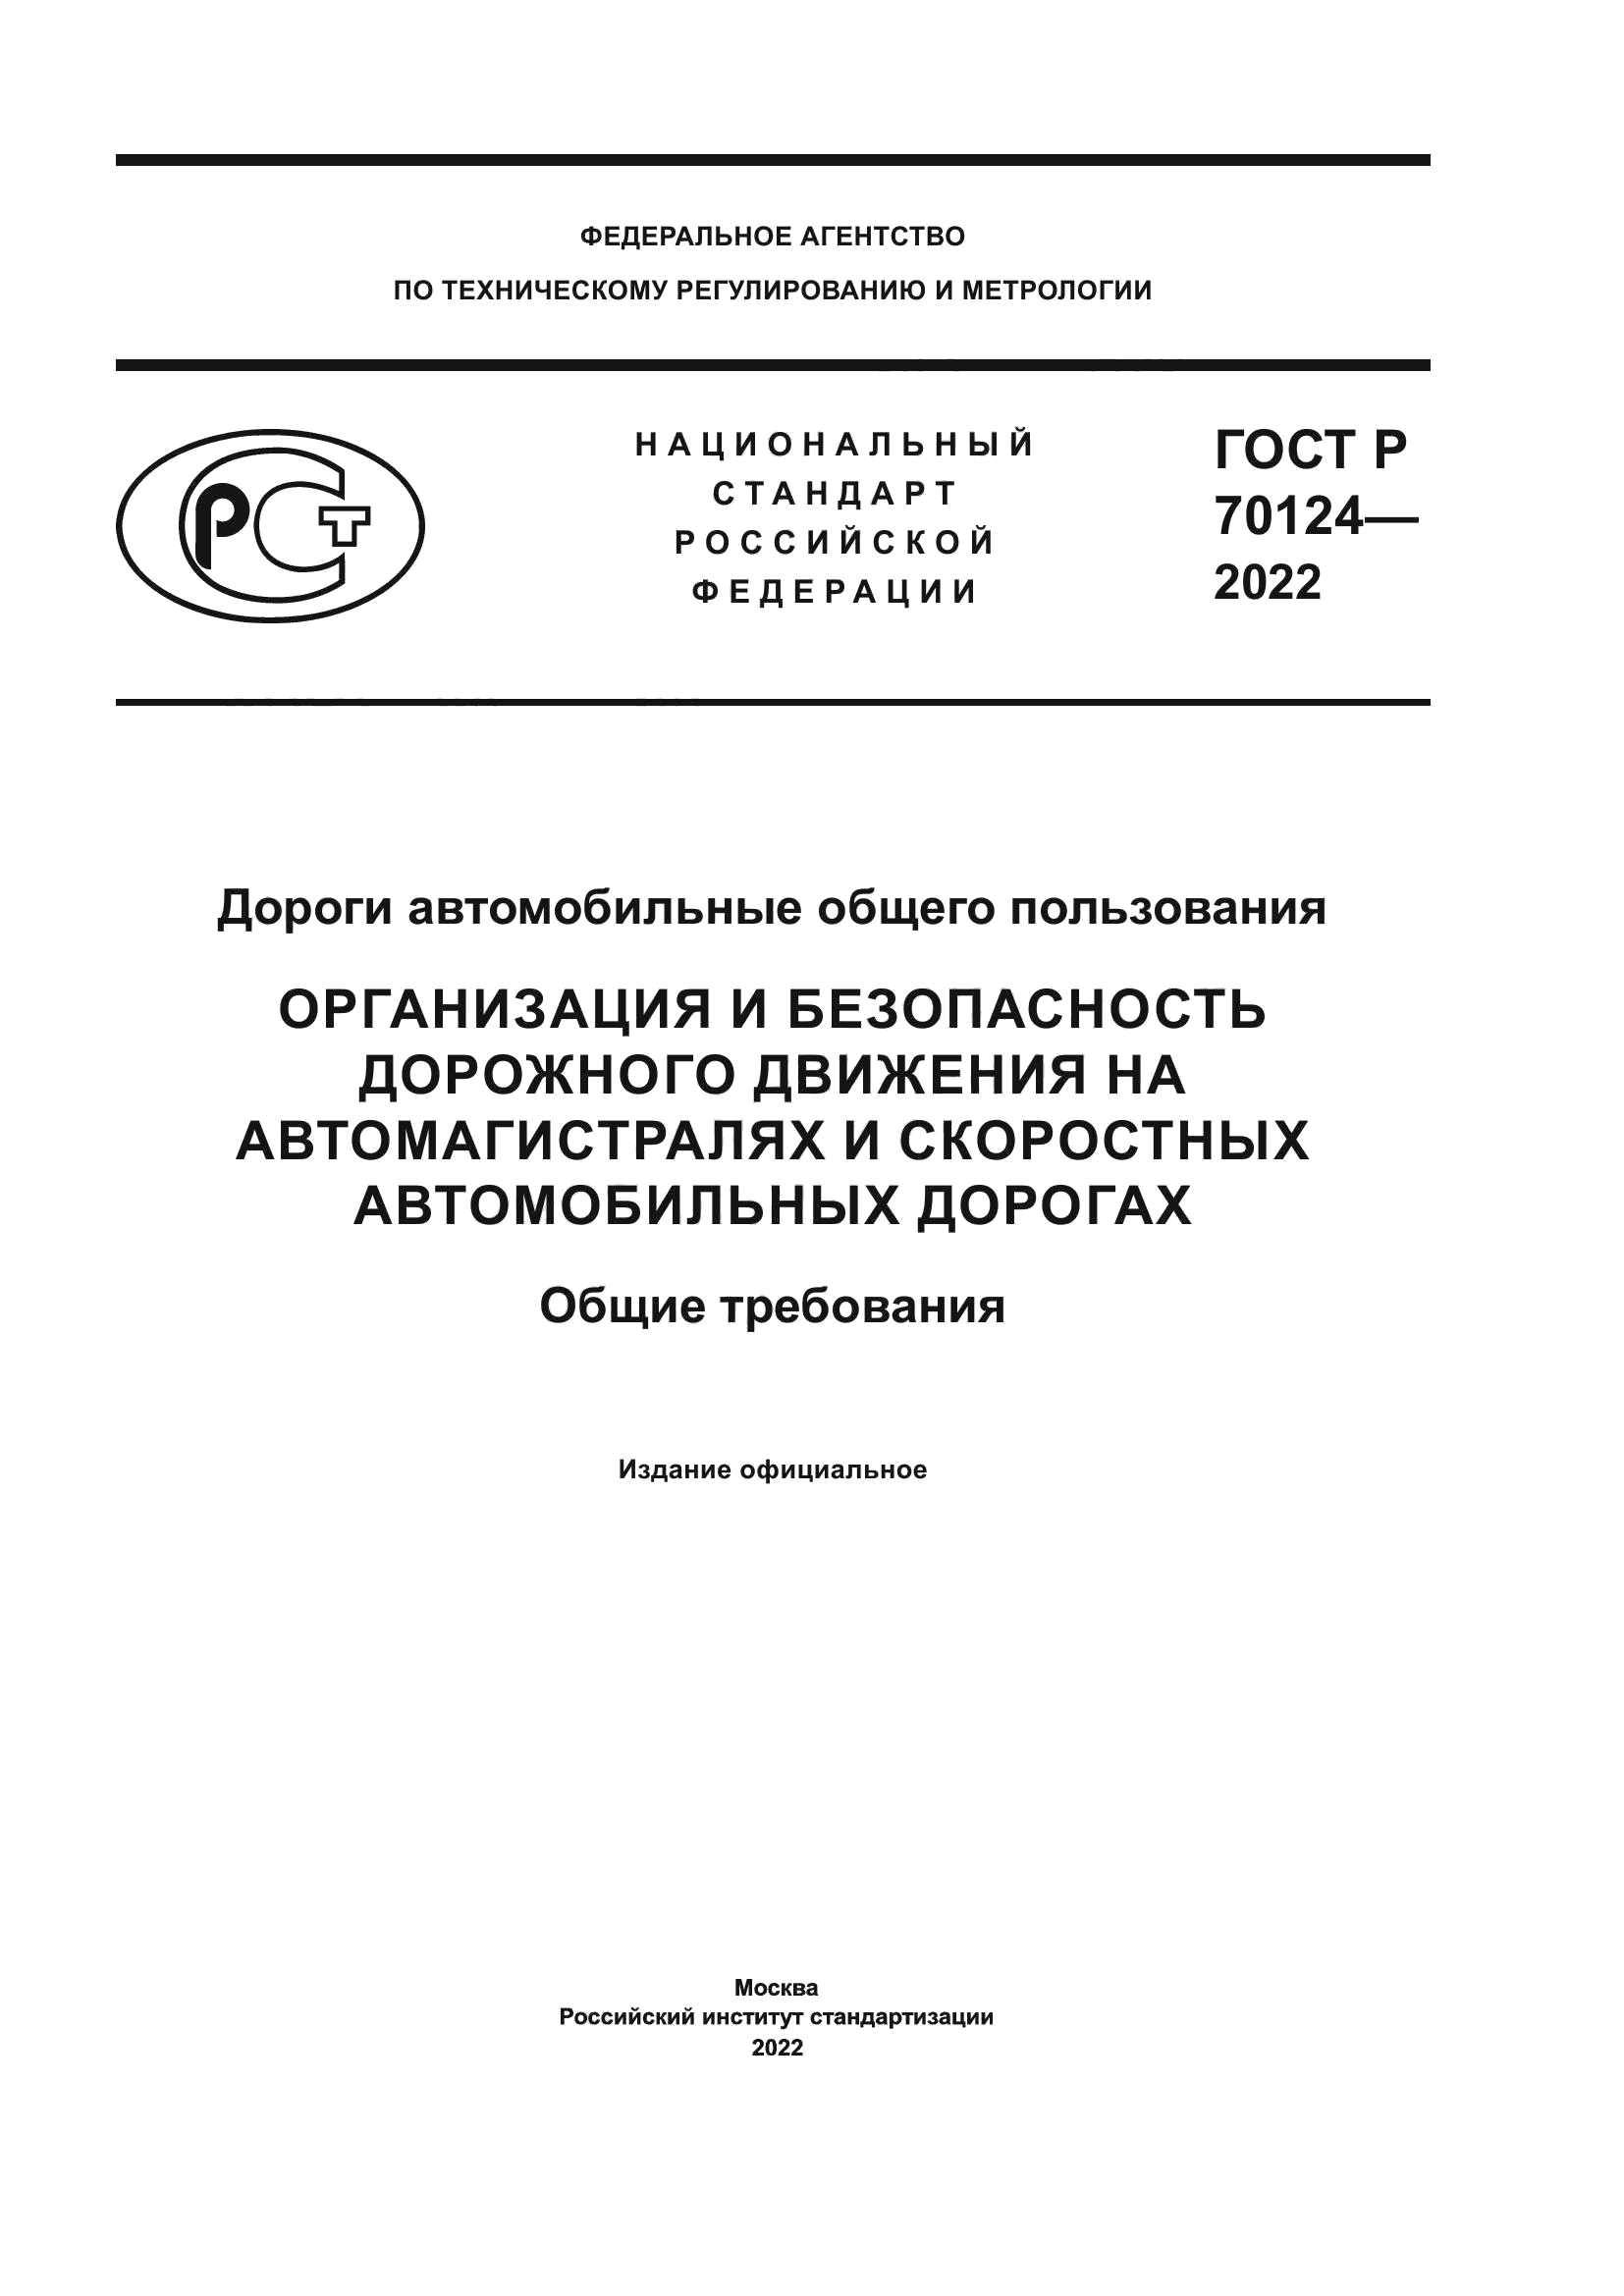 ГОСТ Р 70124-2022